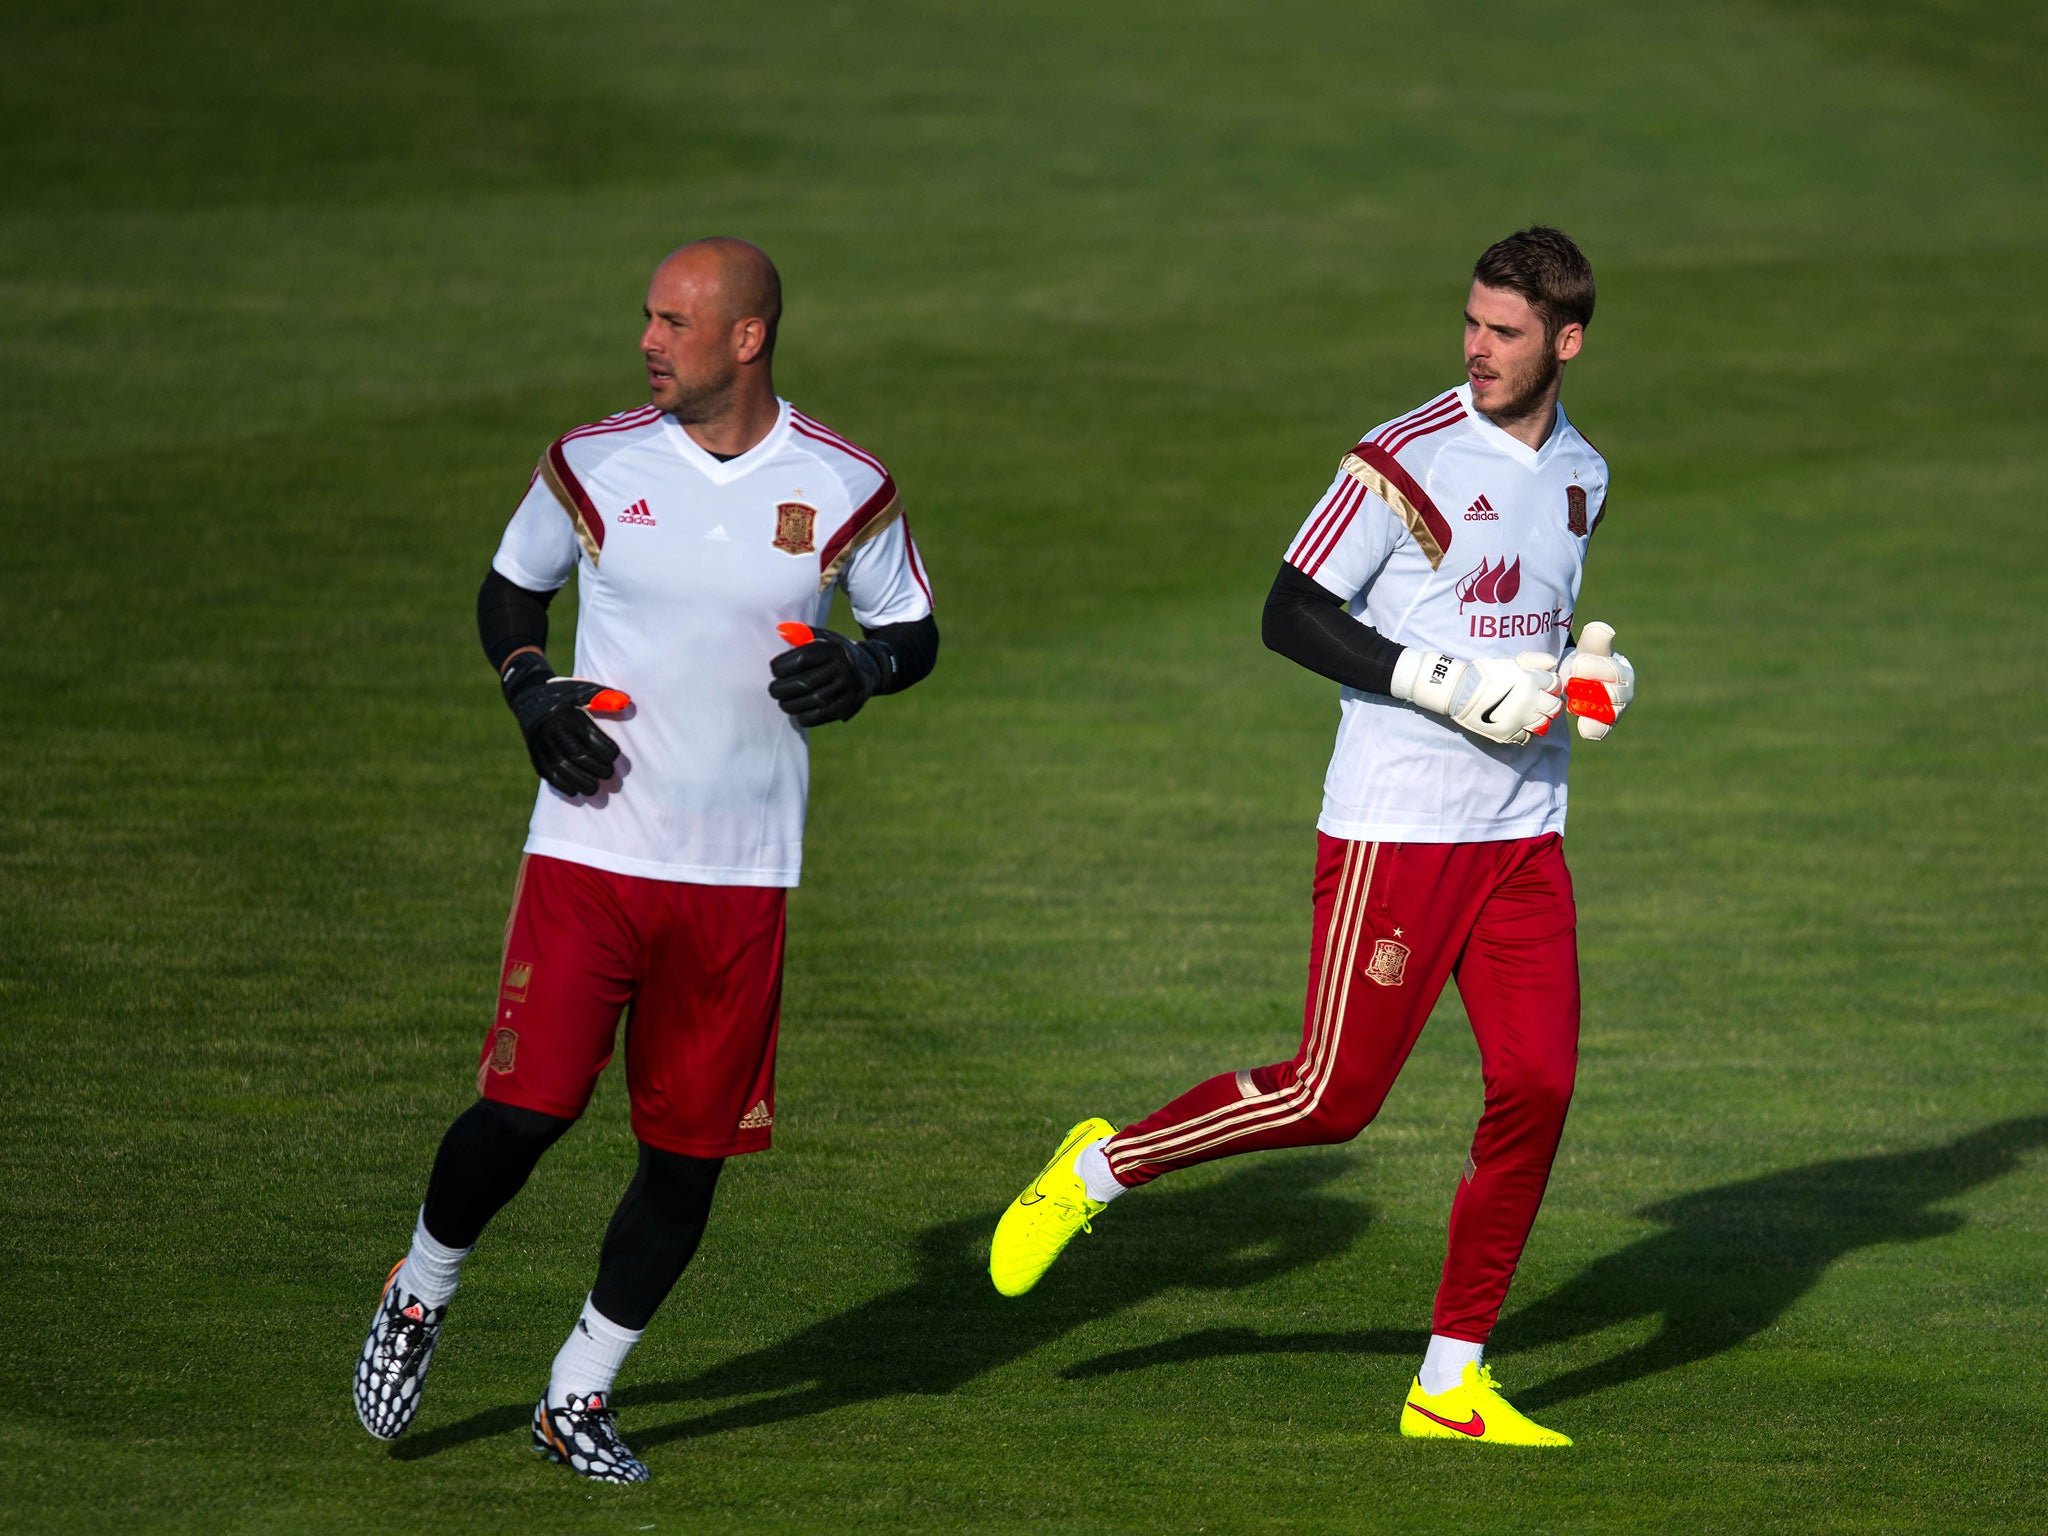 Pepe Reina trains alongside David De Gea ahead of the World Cup